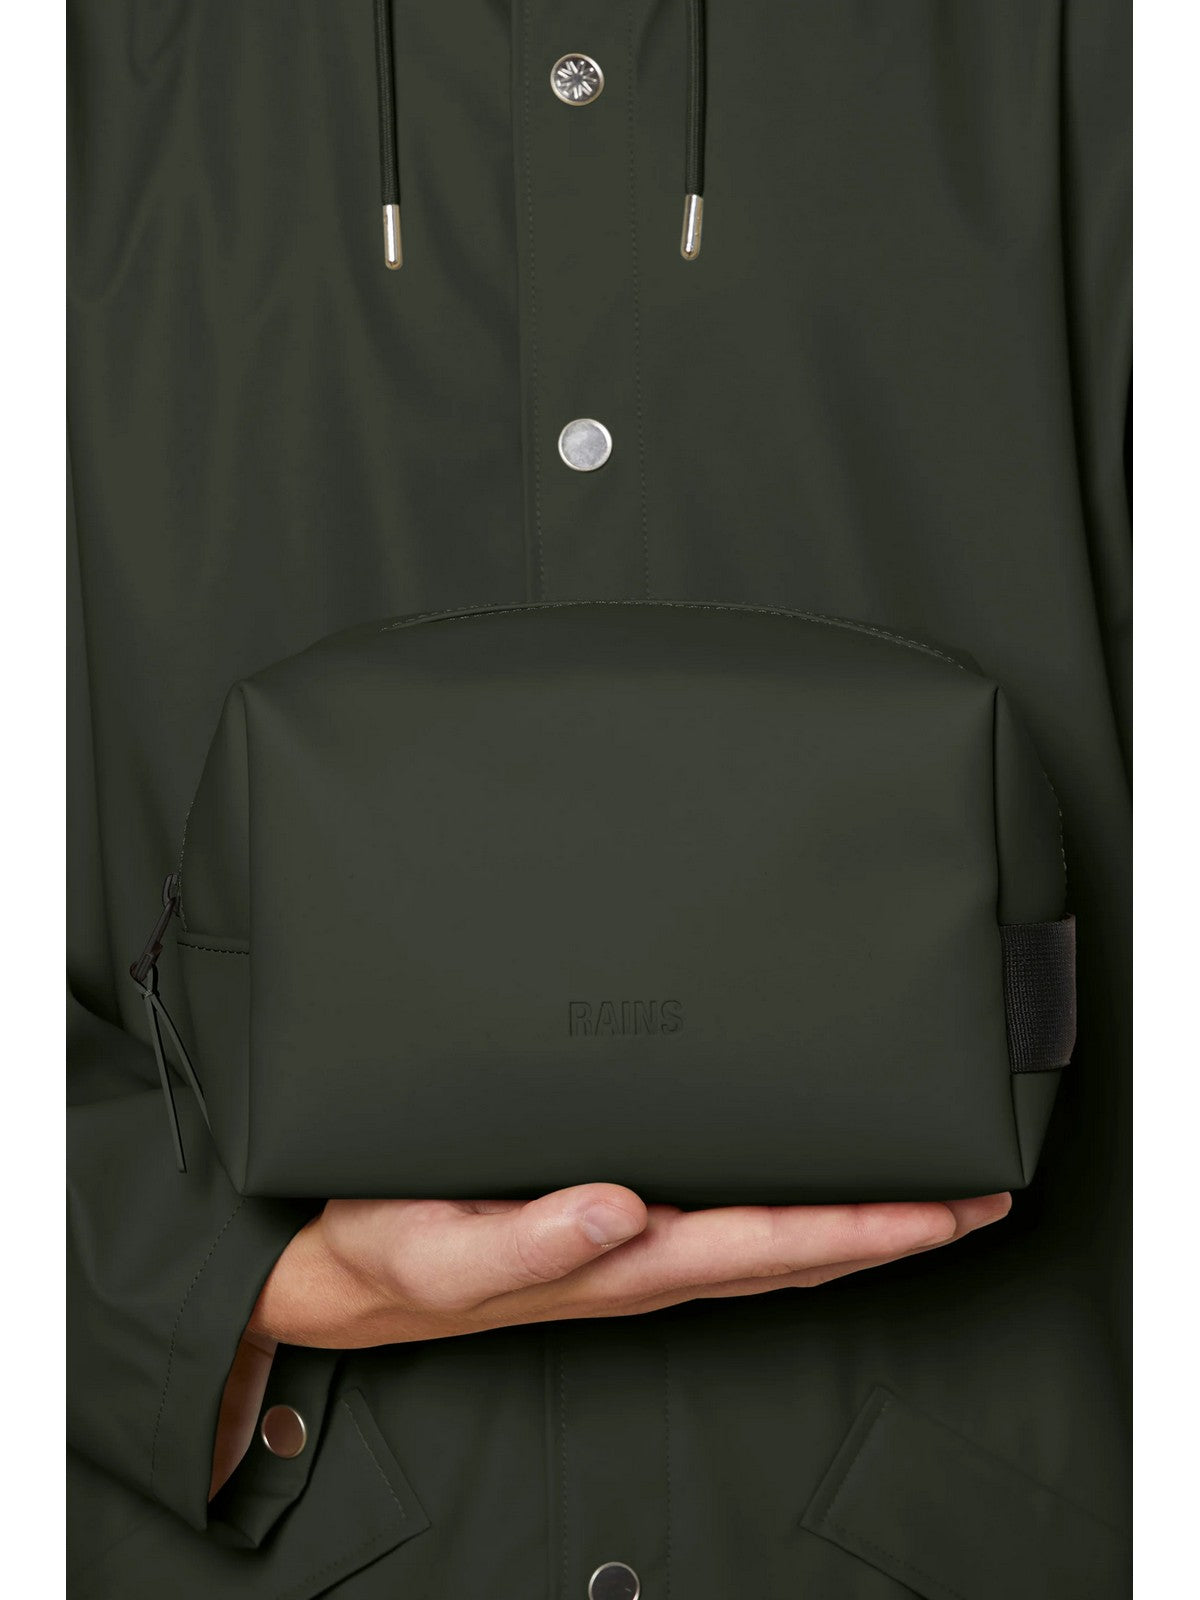 RAINS Pochette Unisex adulto Wash Bag Small W3 15580 03 Green Verde